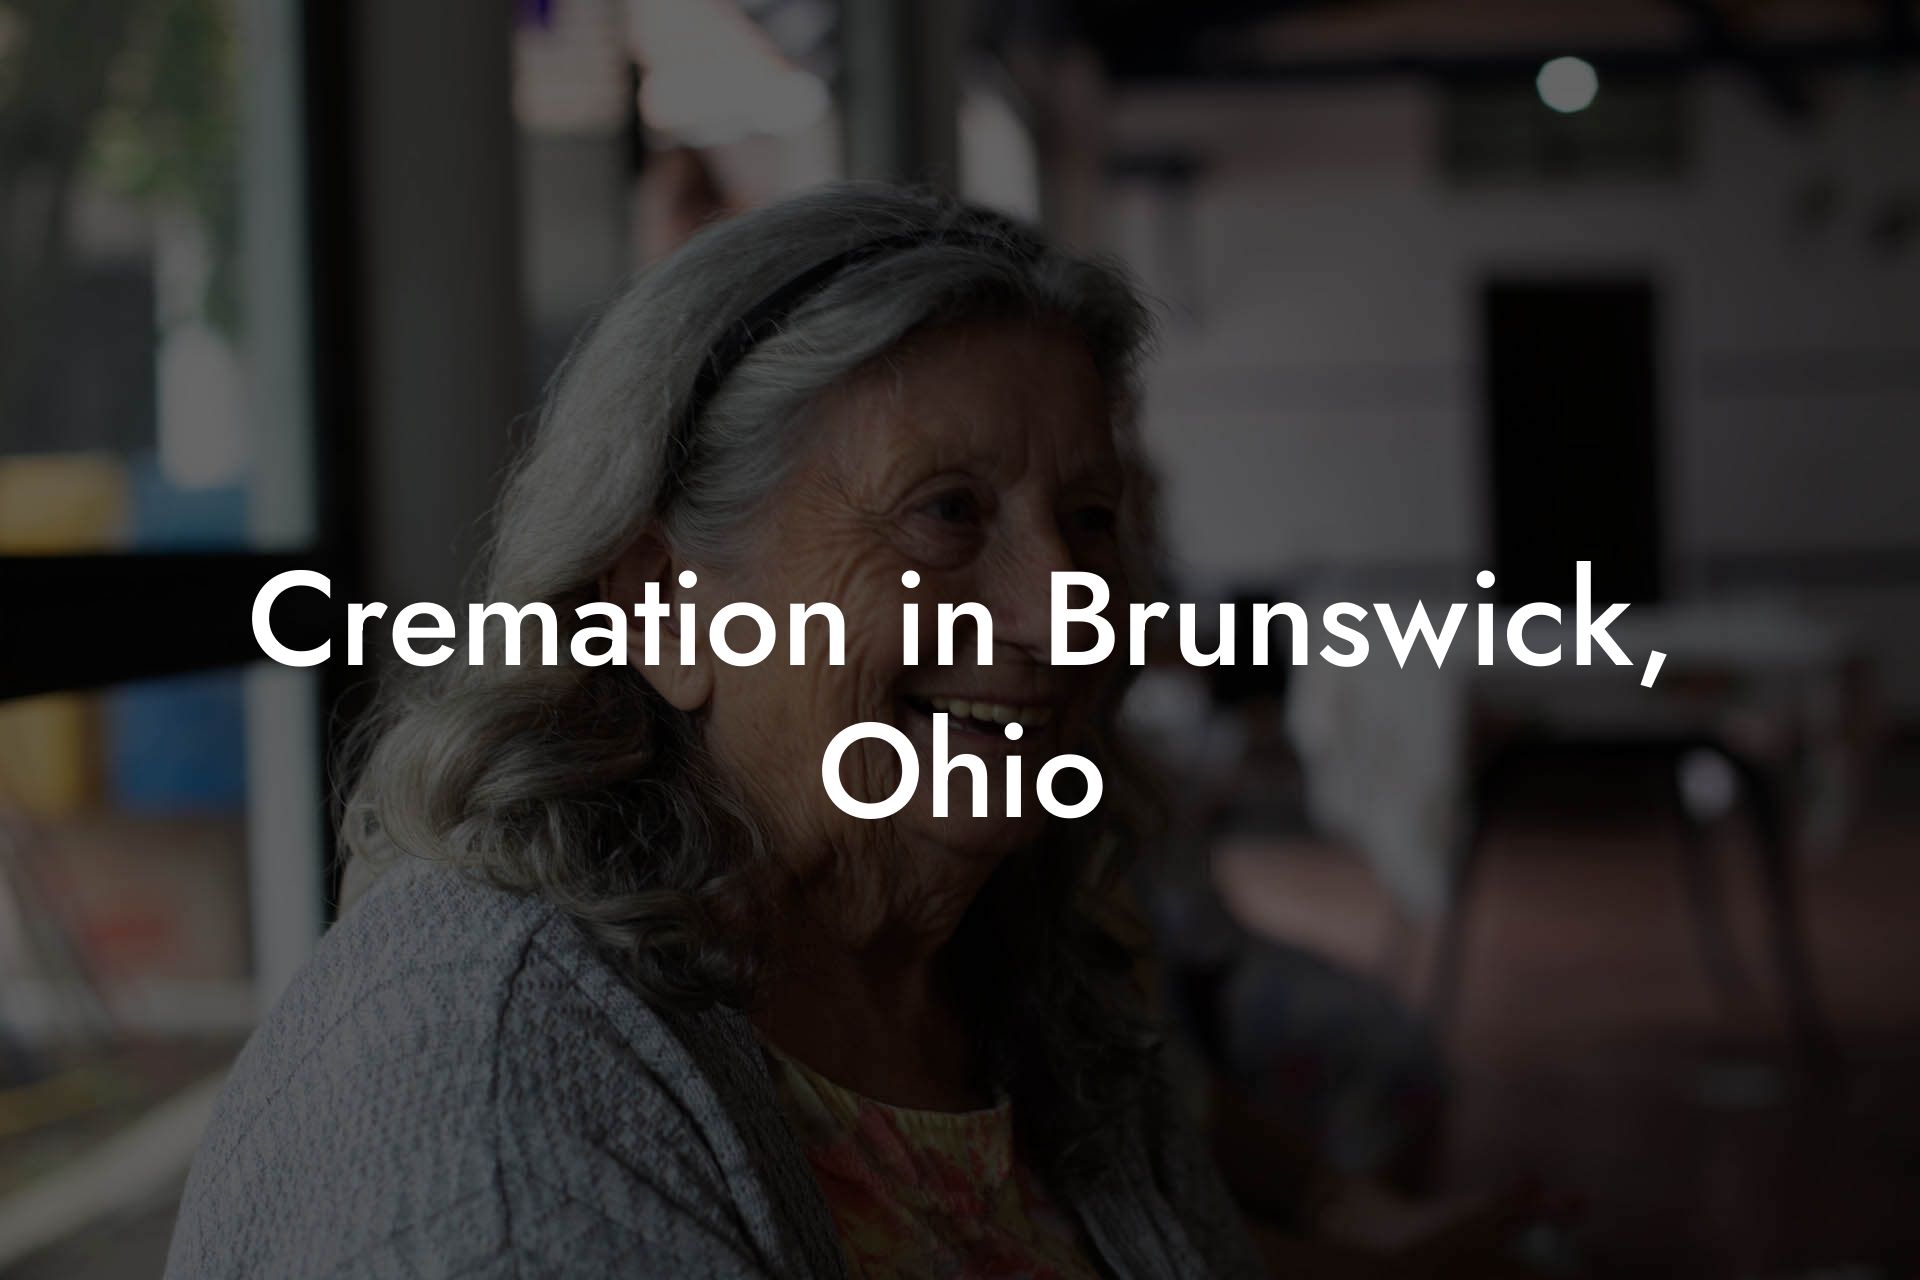 Cremation in Brunswick, Ohio